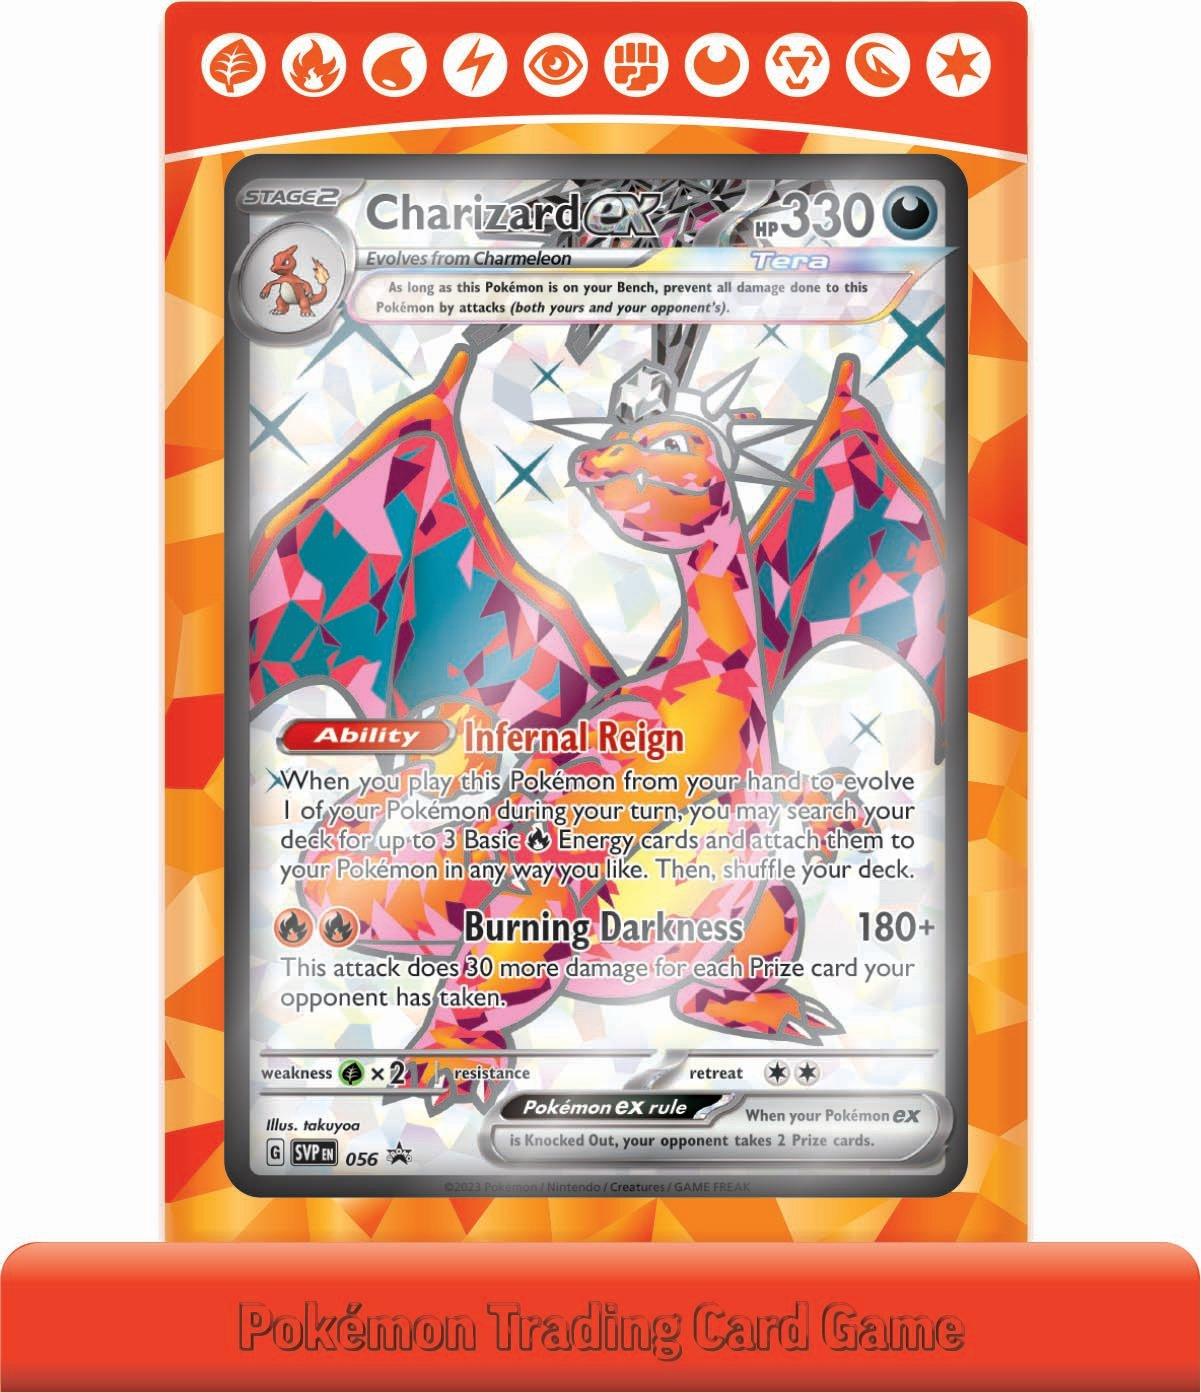 Pokemon Trading Card Game: Charizard ex Premium Collection